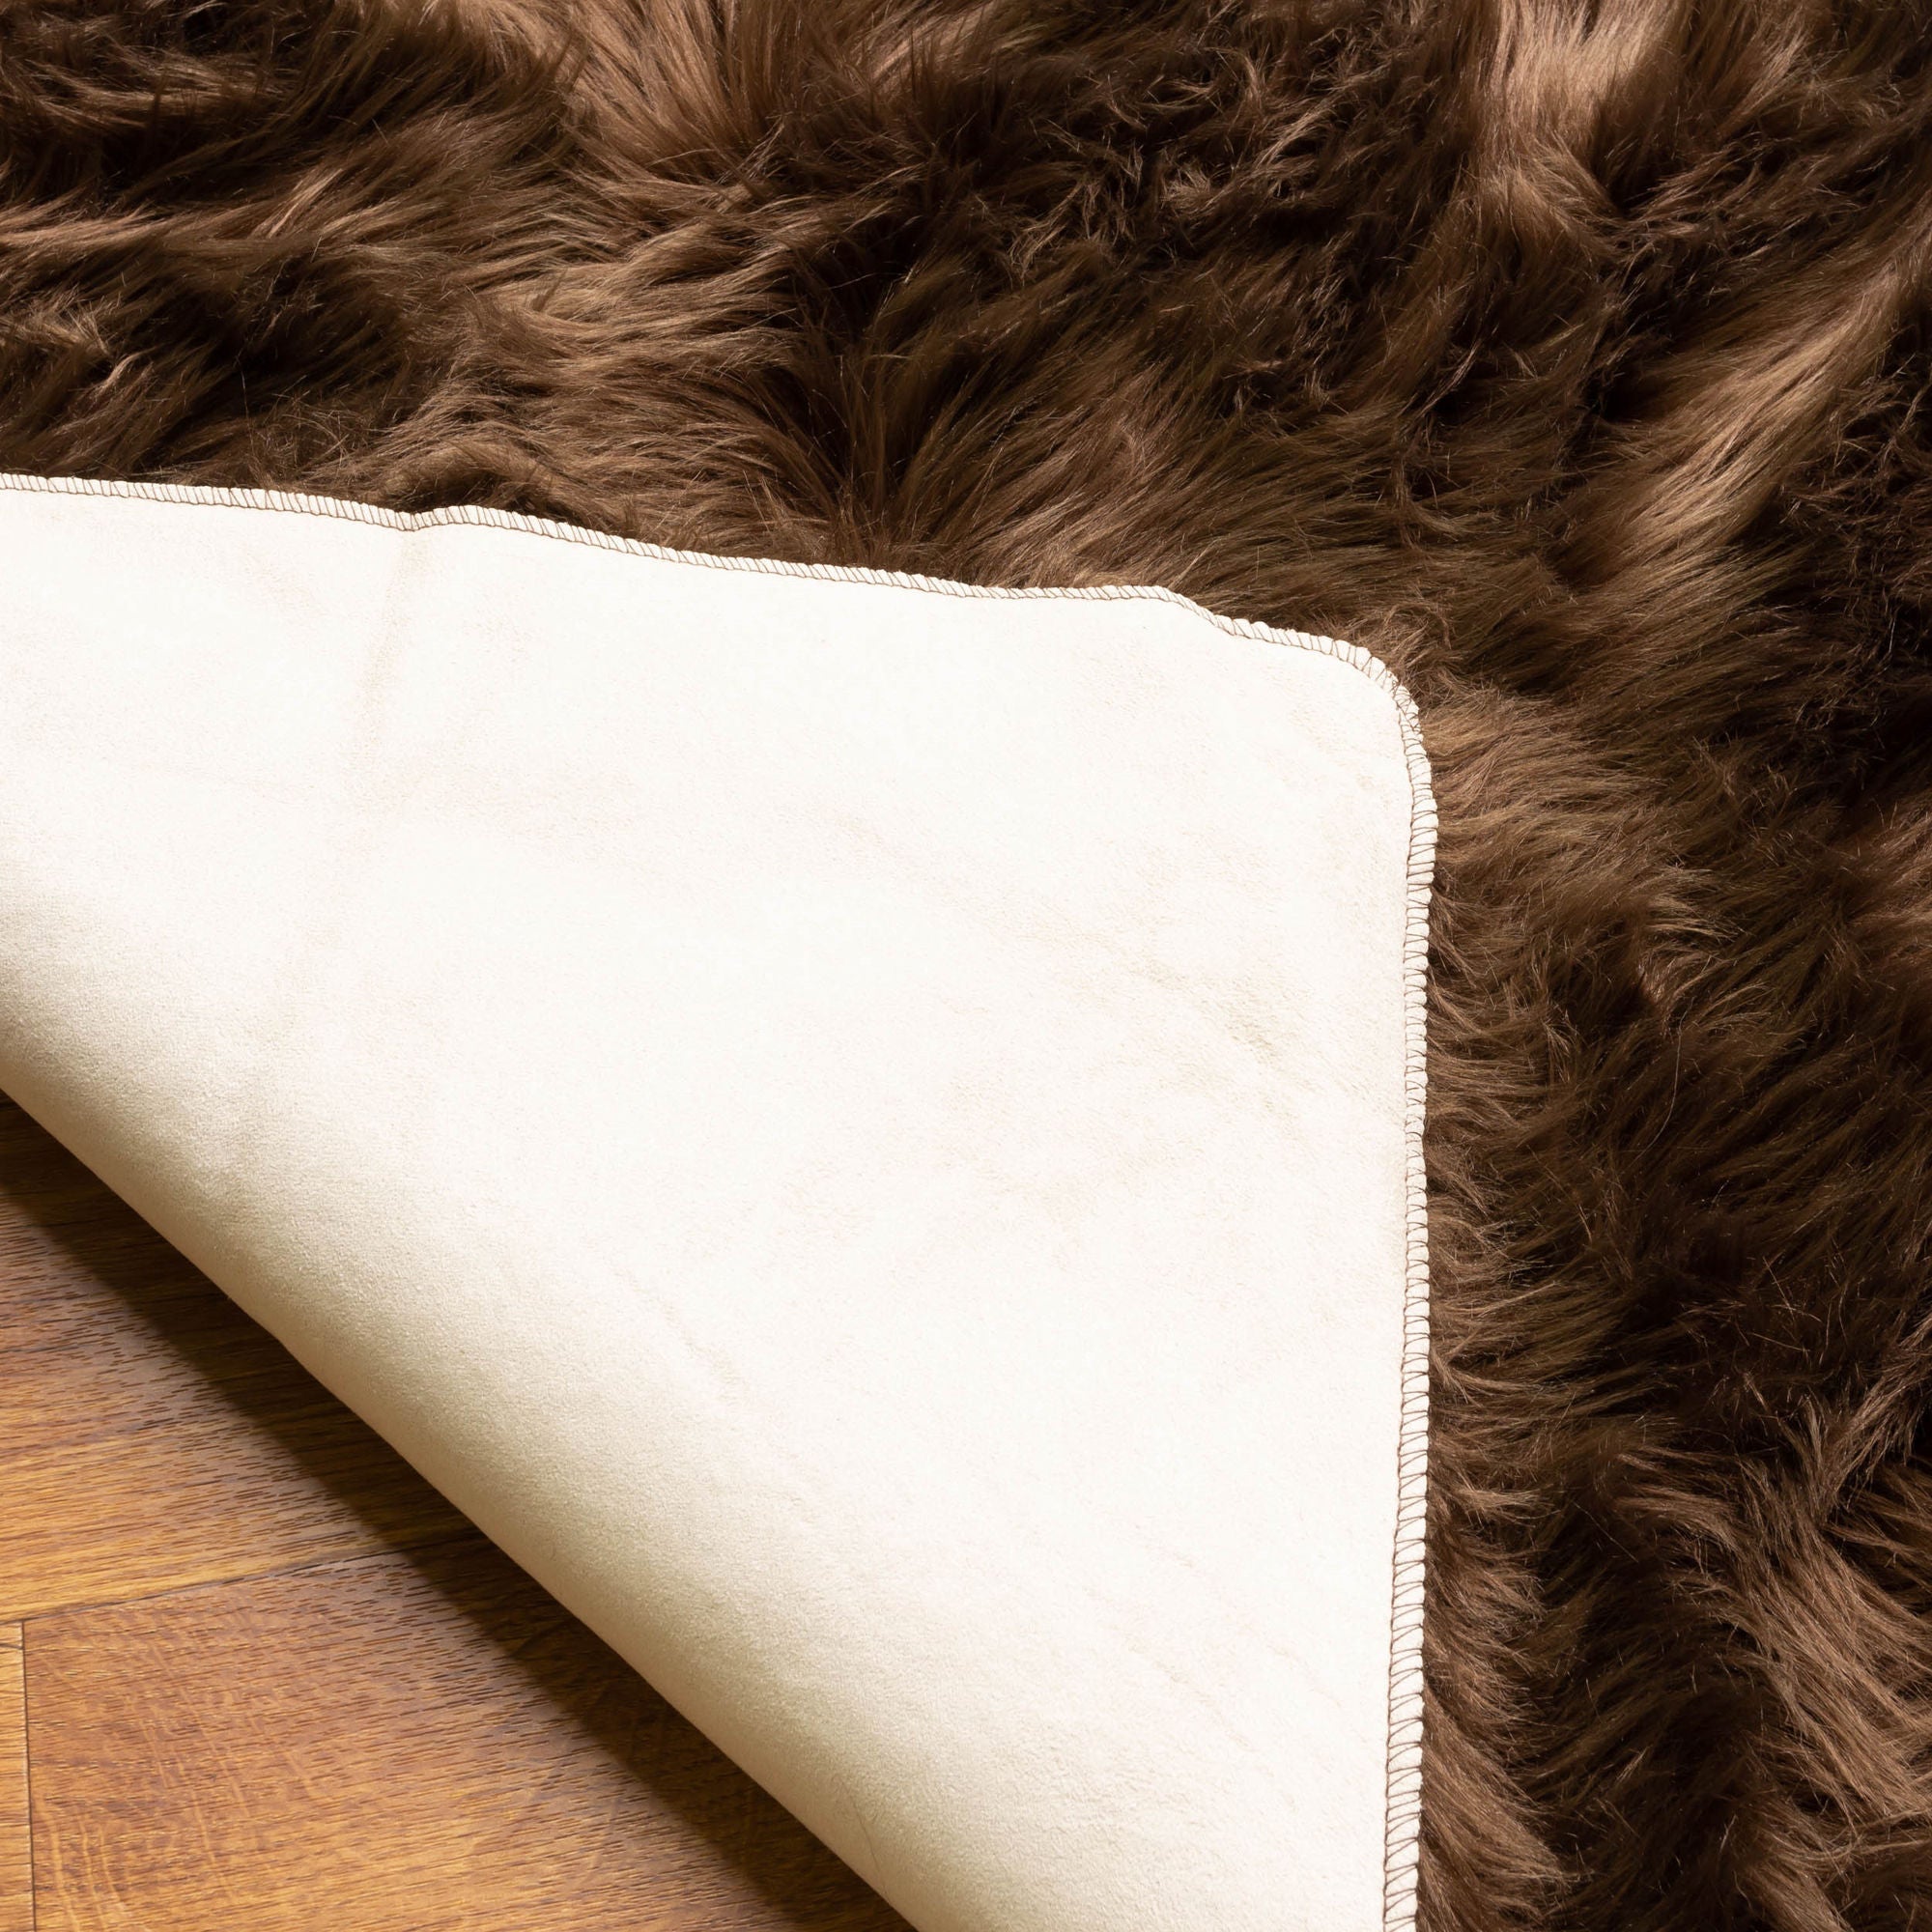 Soft Faux Sheepskin Fur Fluffy Area Rug in Dark Brown #color_dark brown